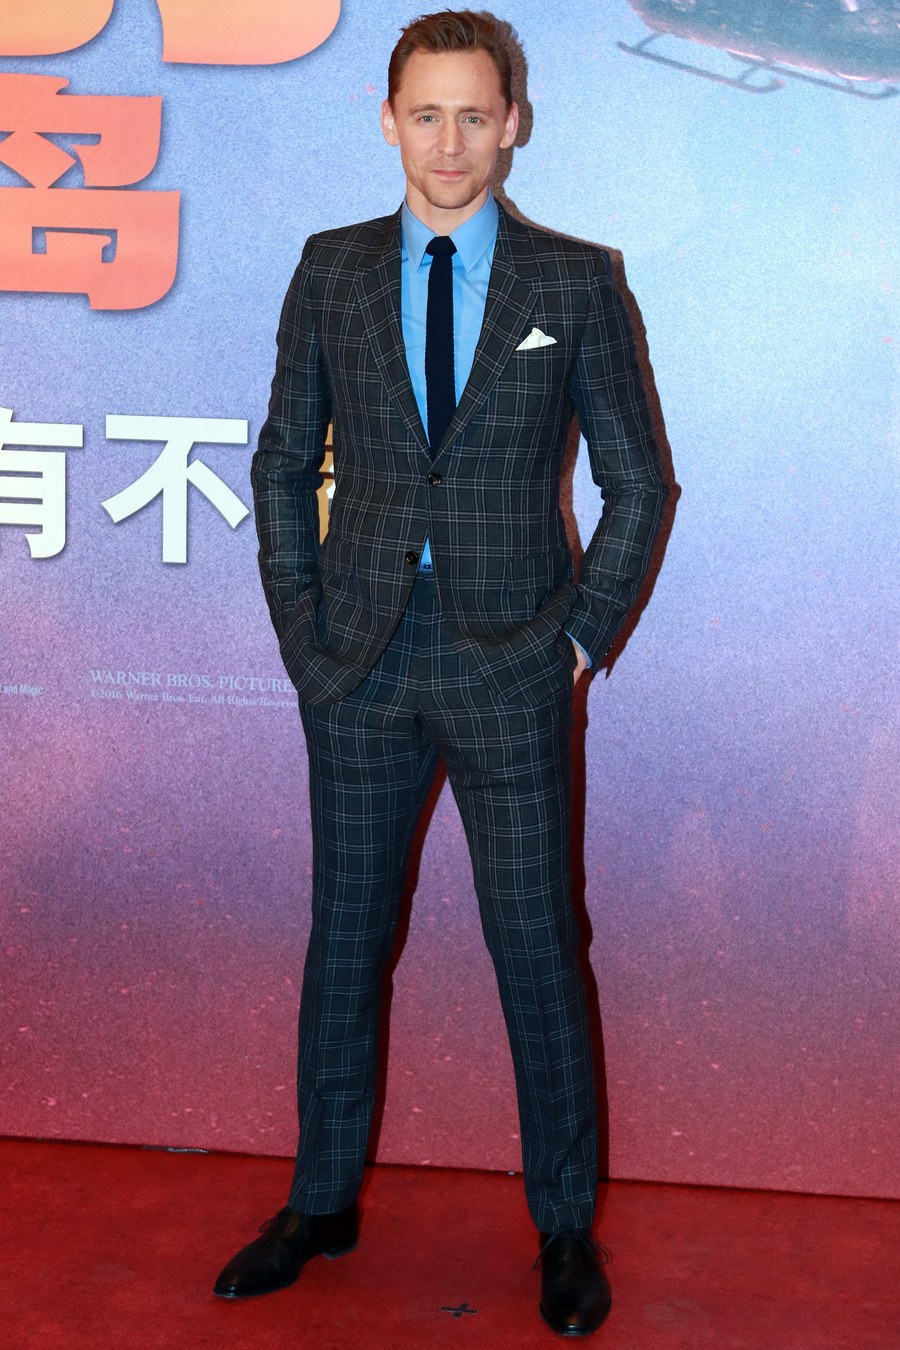 How to dress like Tom Hiddleston